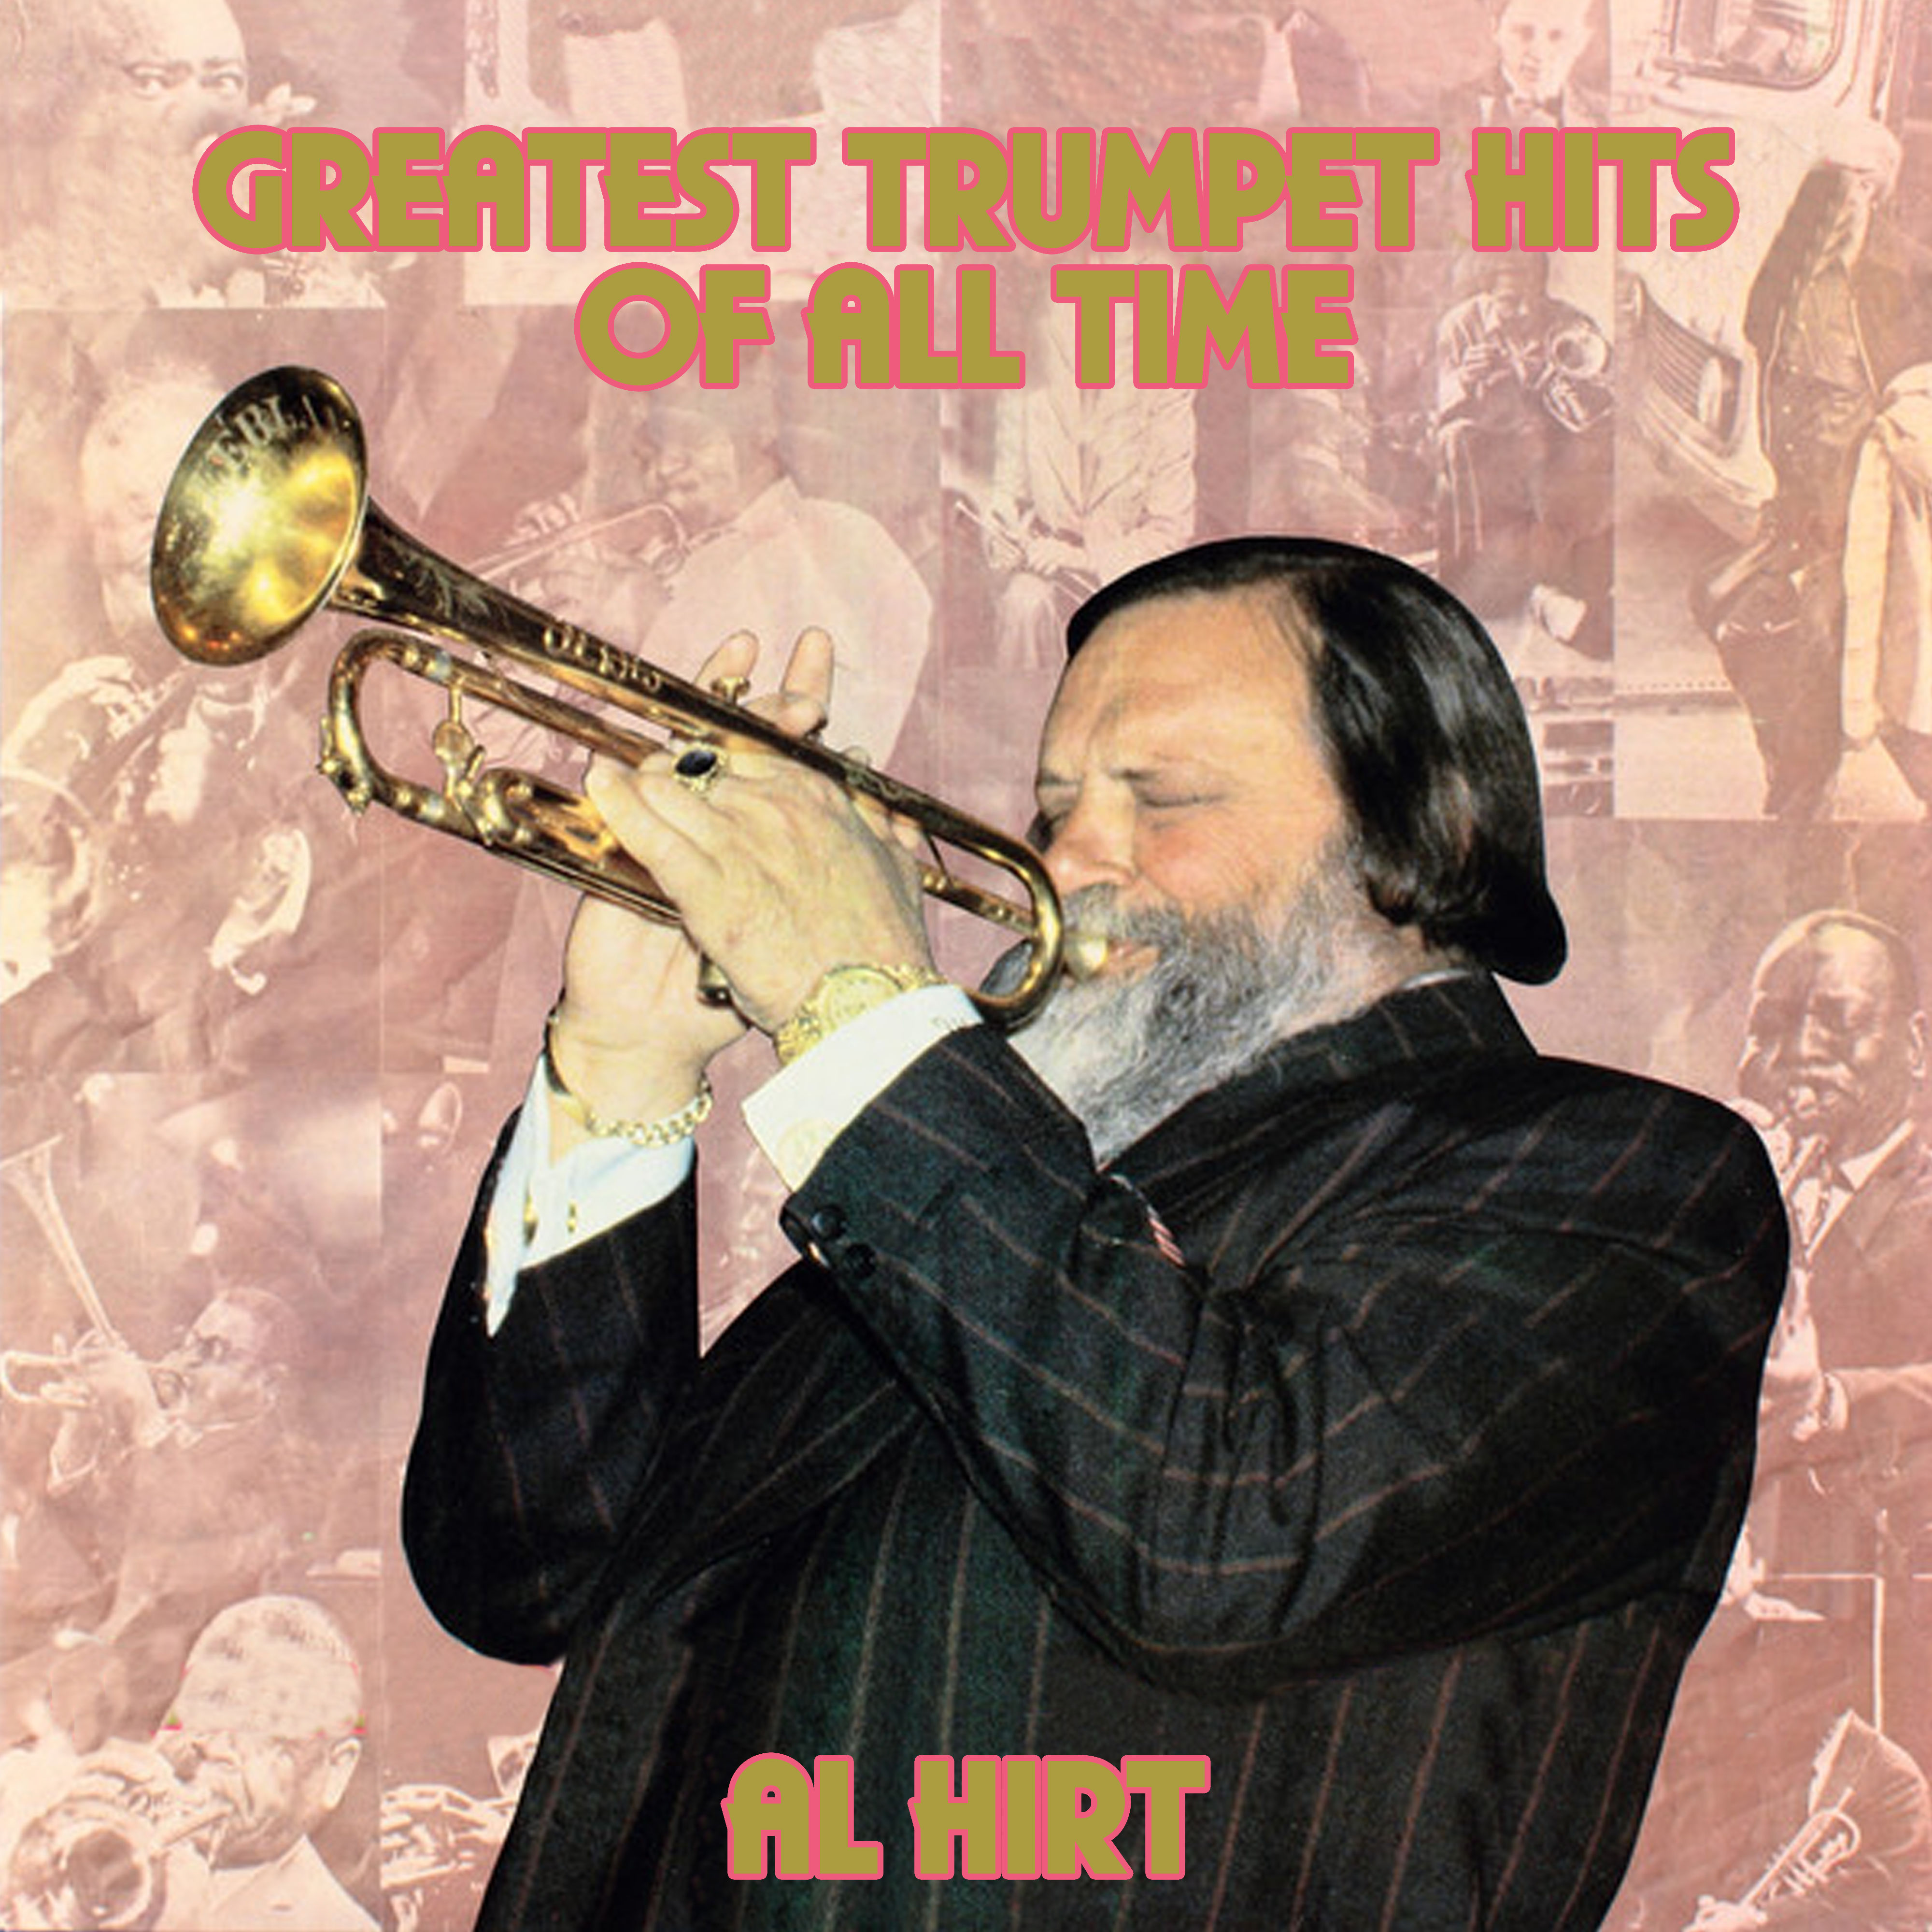 Al Hirt - Greatest Trumpet Hits of All Time (1979/2015) [FLAC 24bit/96kHz]